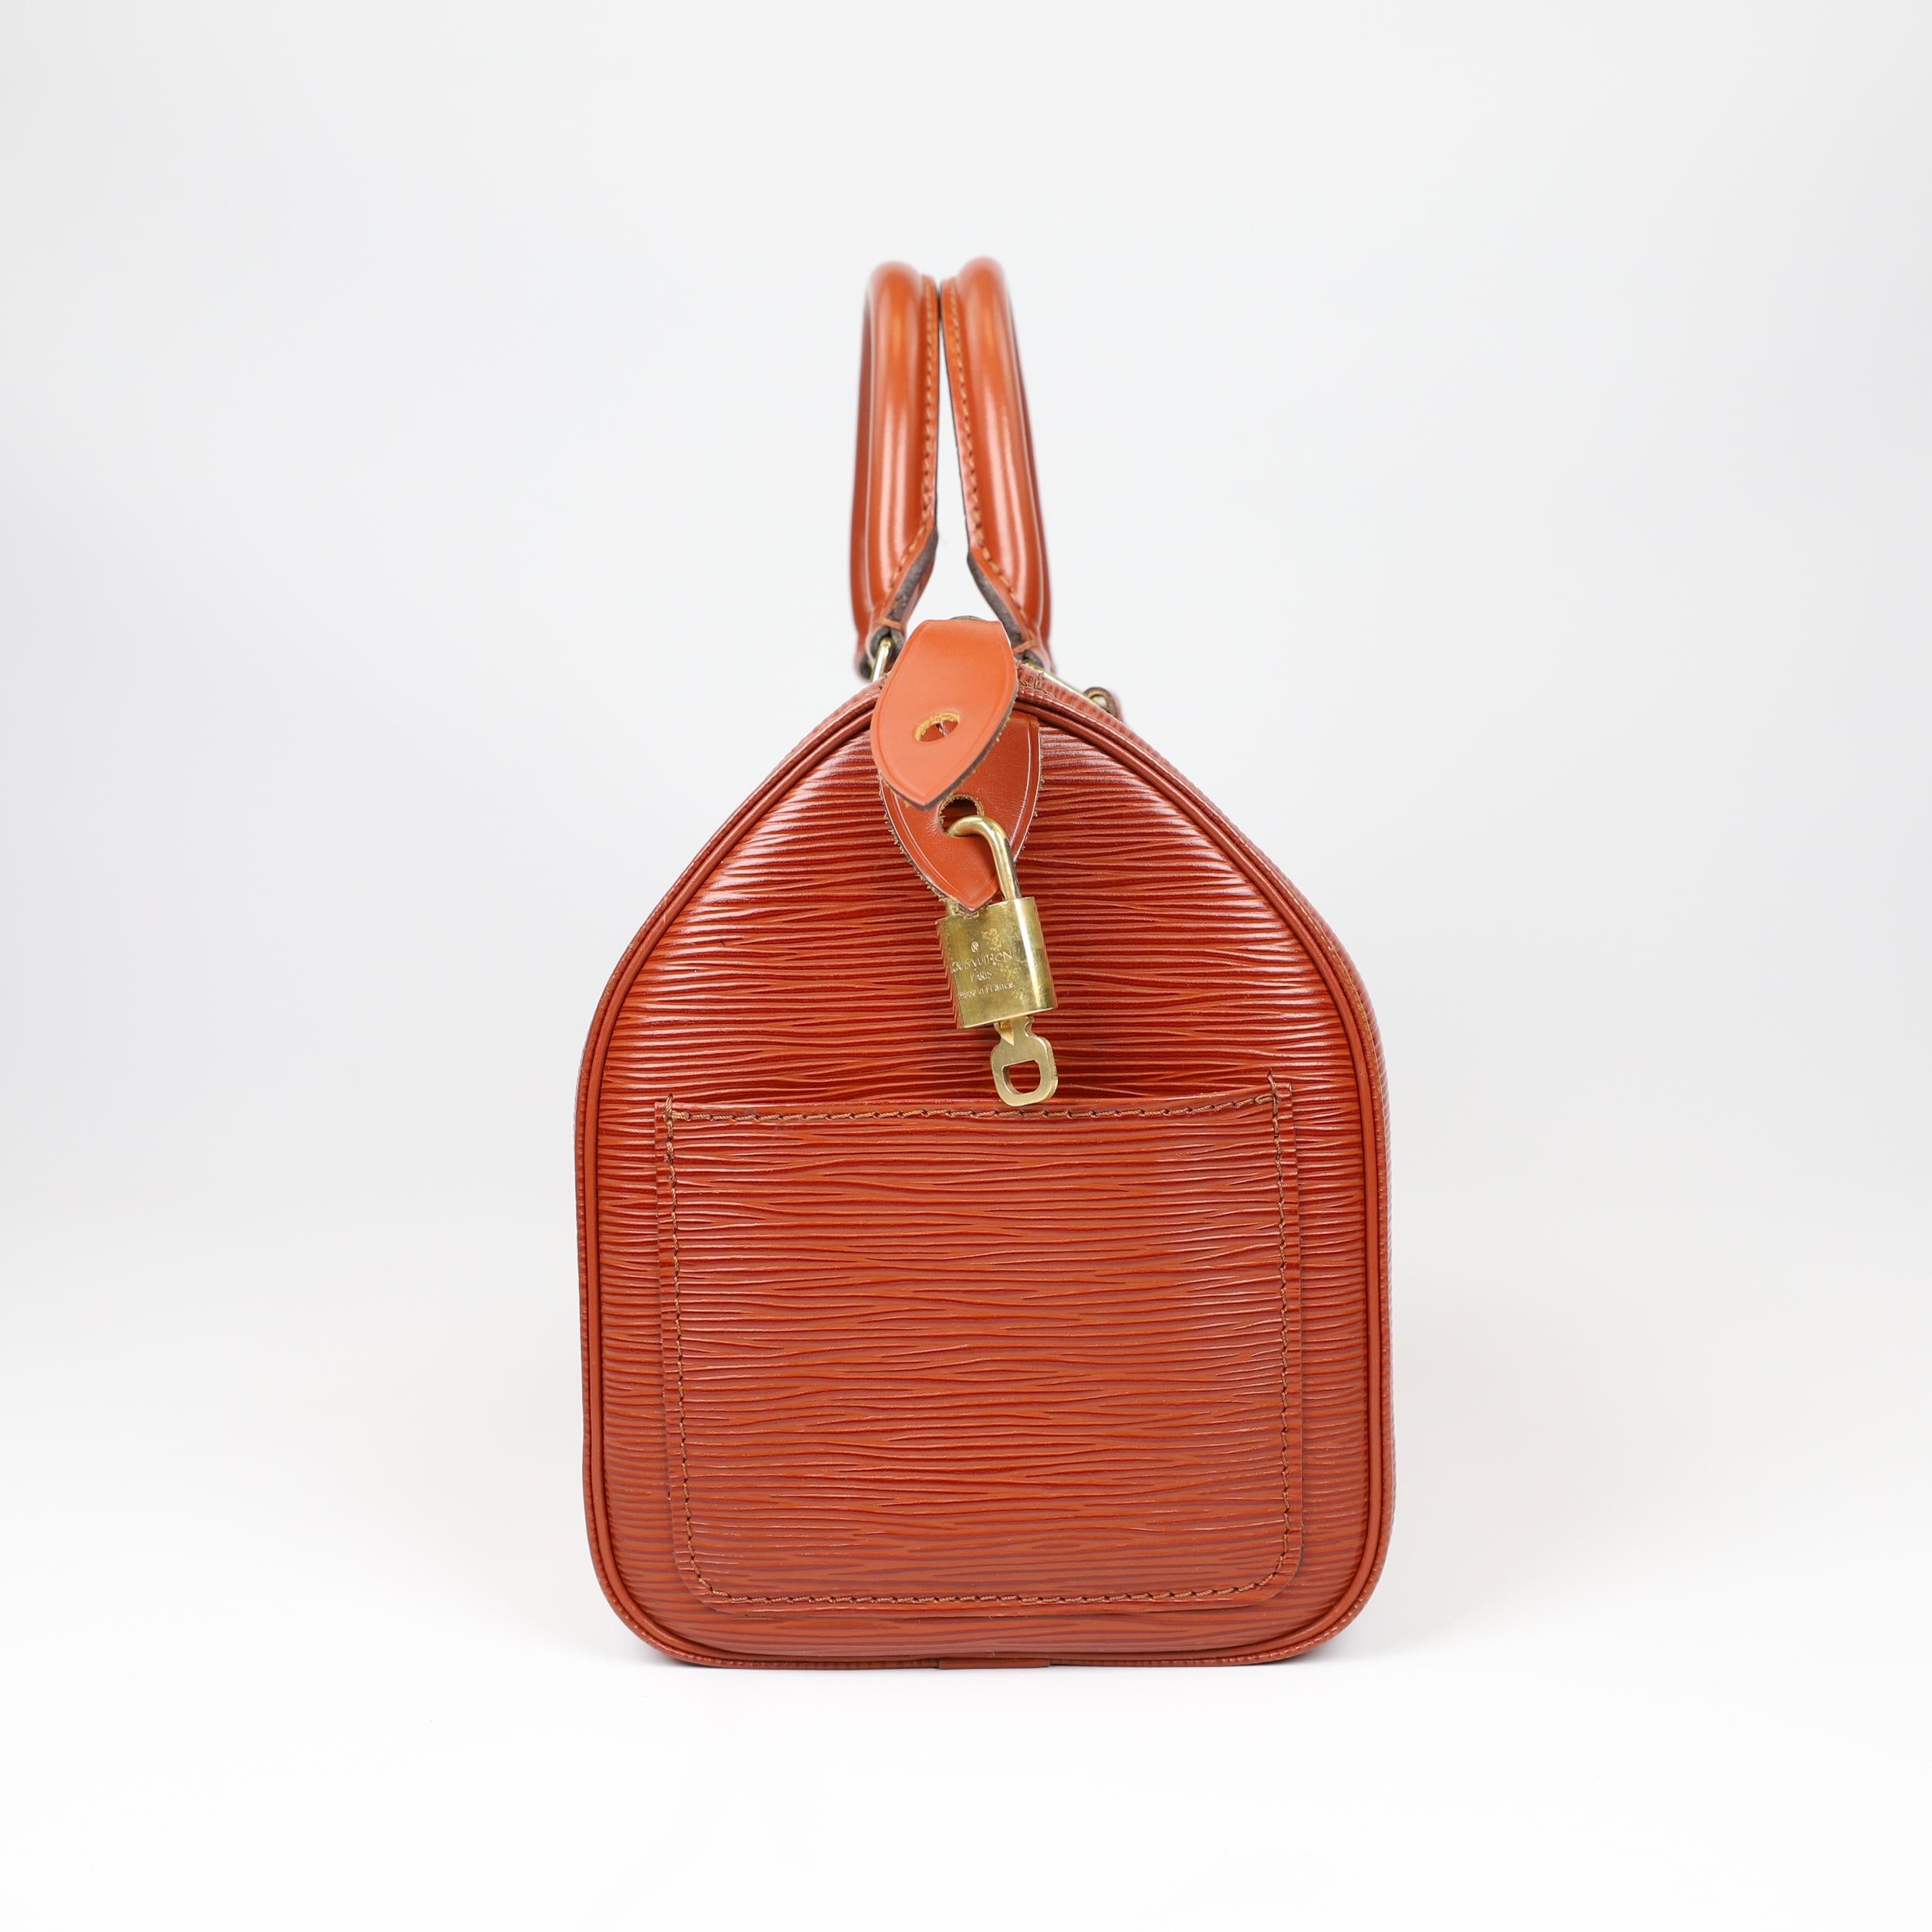 Women's Louis Vuitton Speedy leather handbag